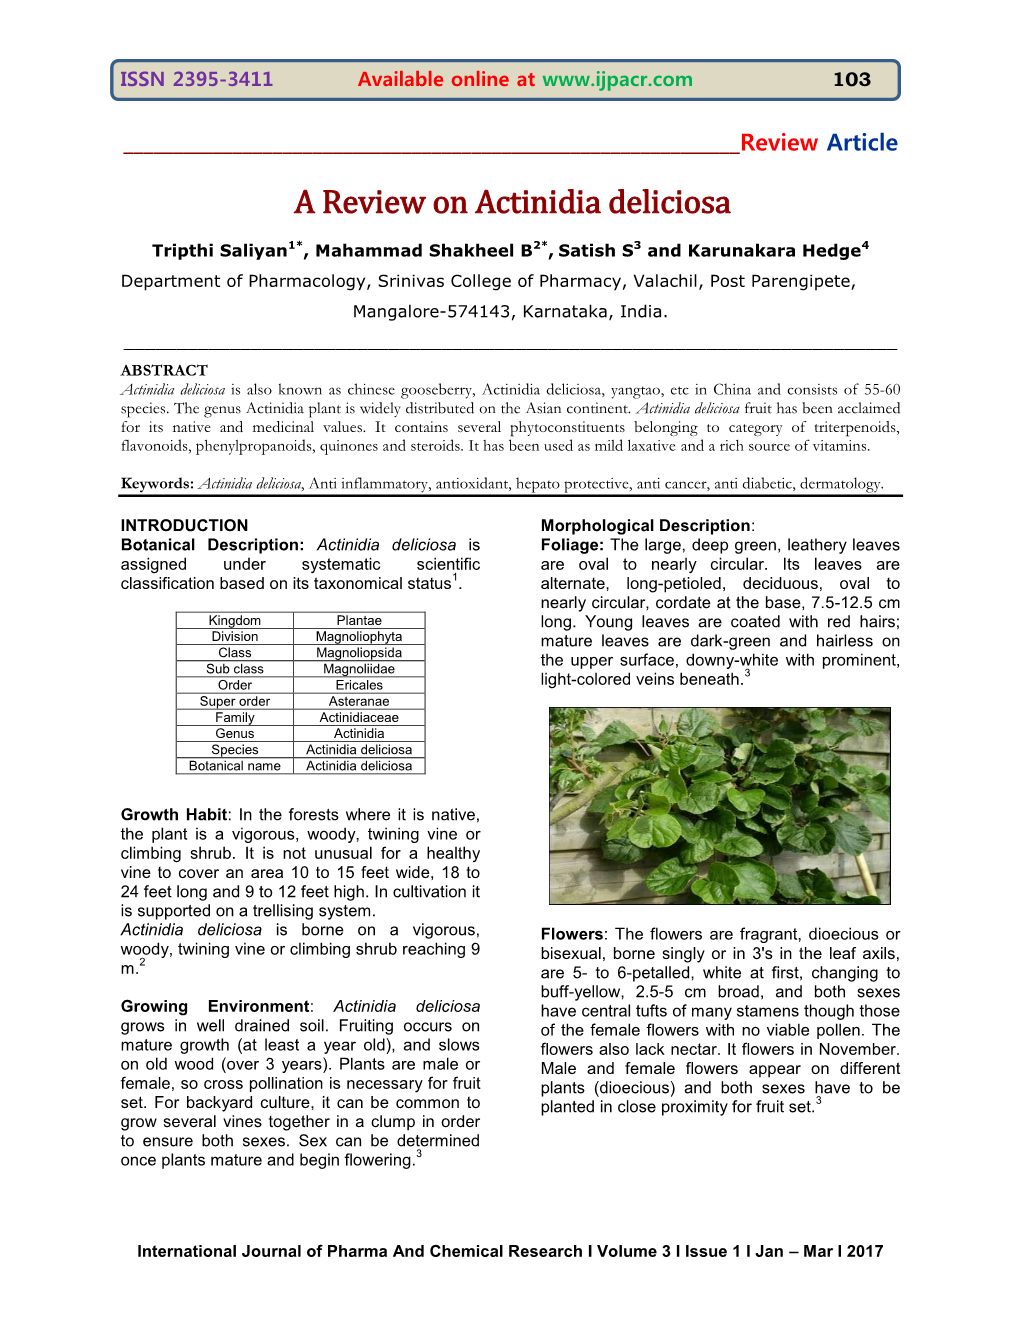 A Review on Actinidia Deliciosa